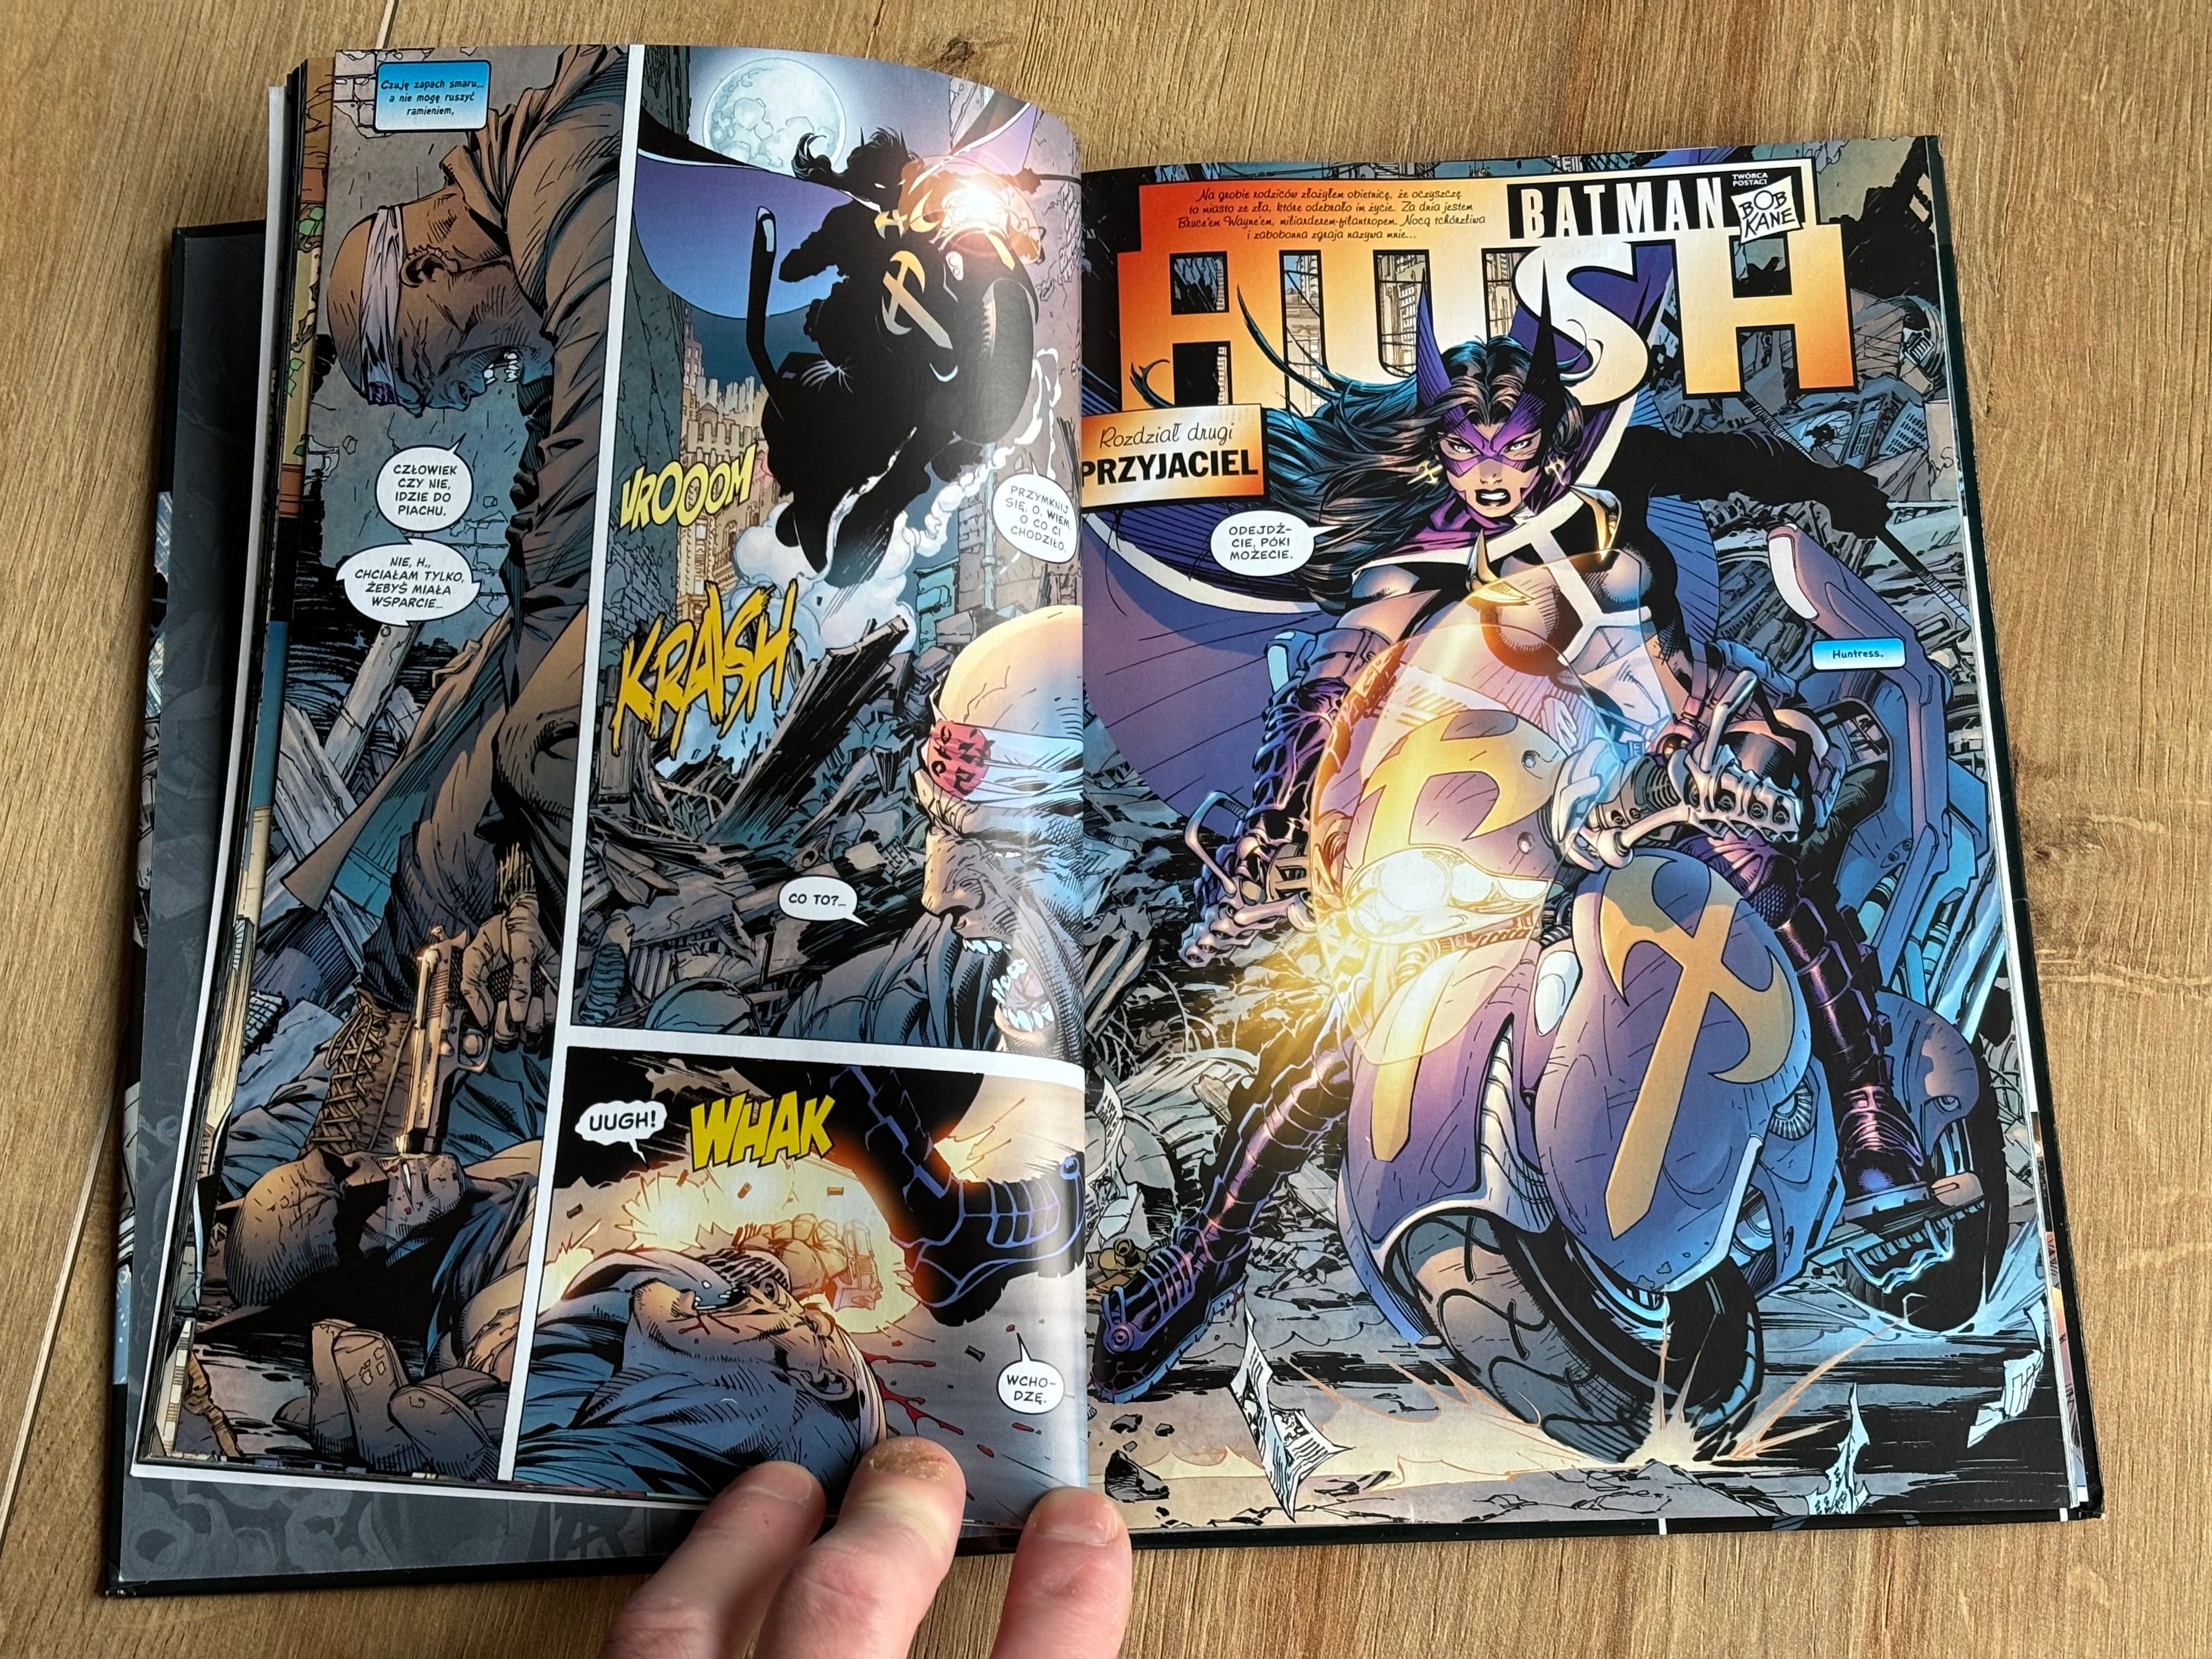 Komiks Batman Hush część 1 / DC Comics